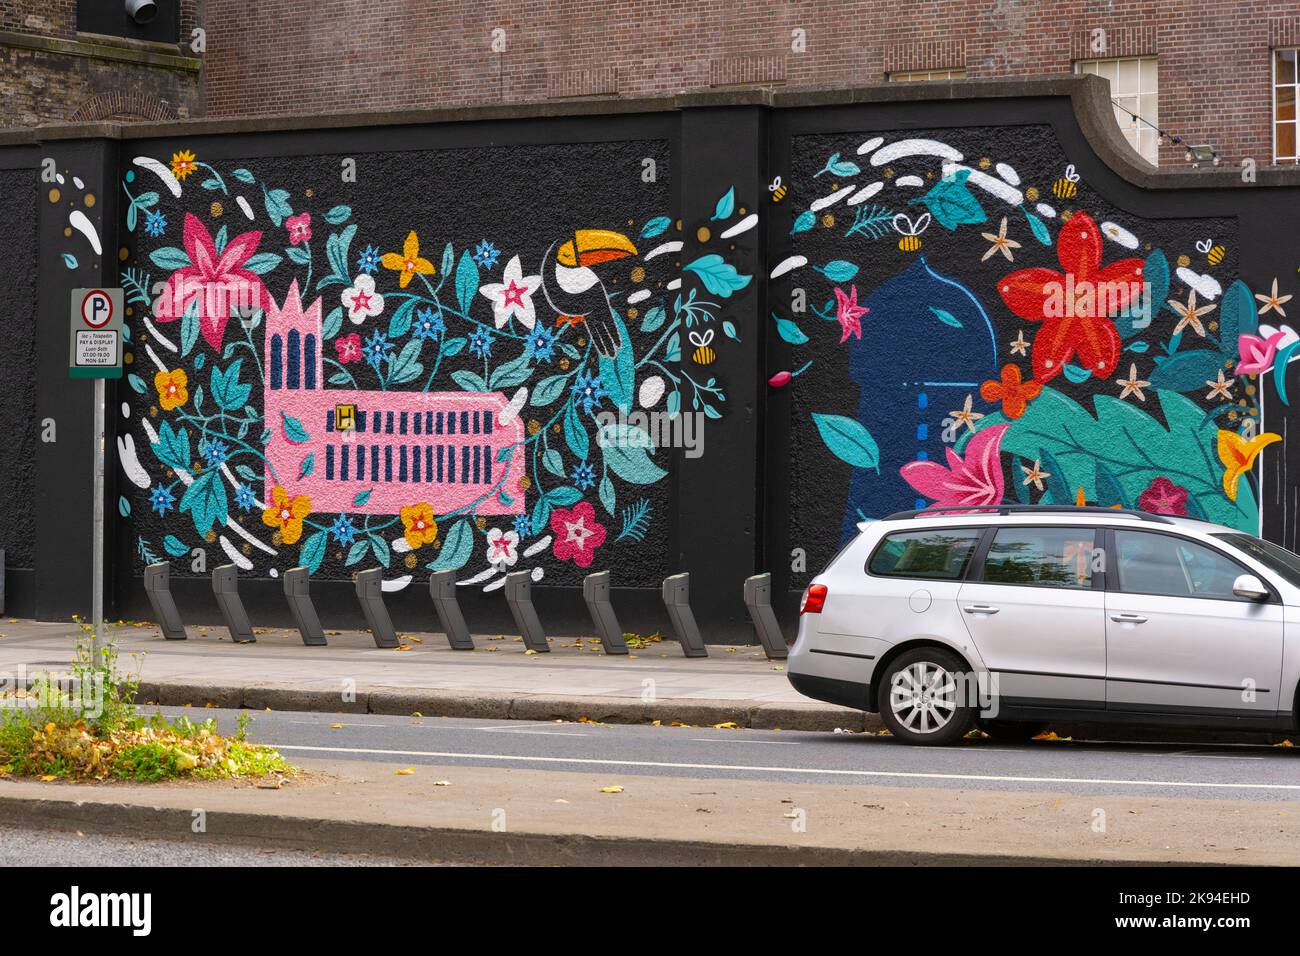 Irlanda Eire Dublino Street art pittura moderna contemporanea graffiti murali di scena fantasiosa cattedrale fiori api toucan muro marciapiede marciapiede Foto Stock